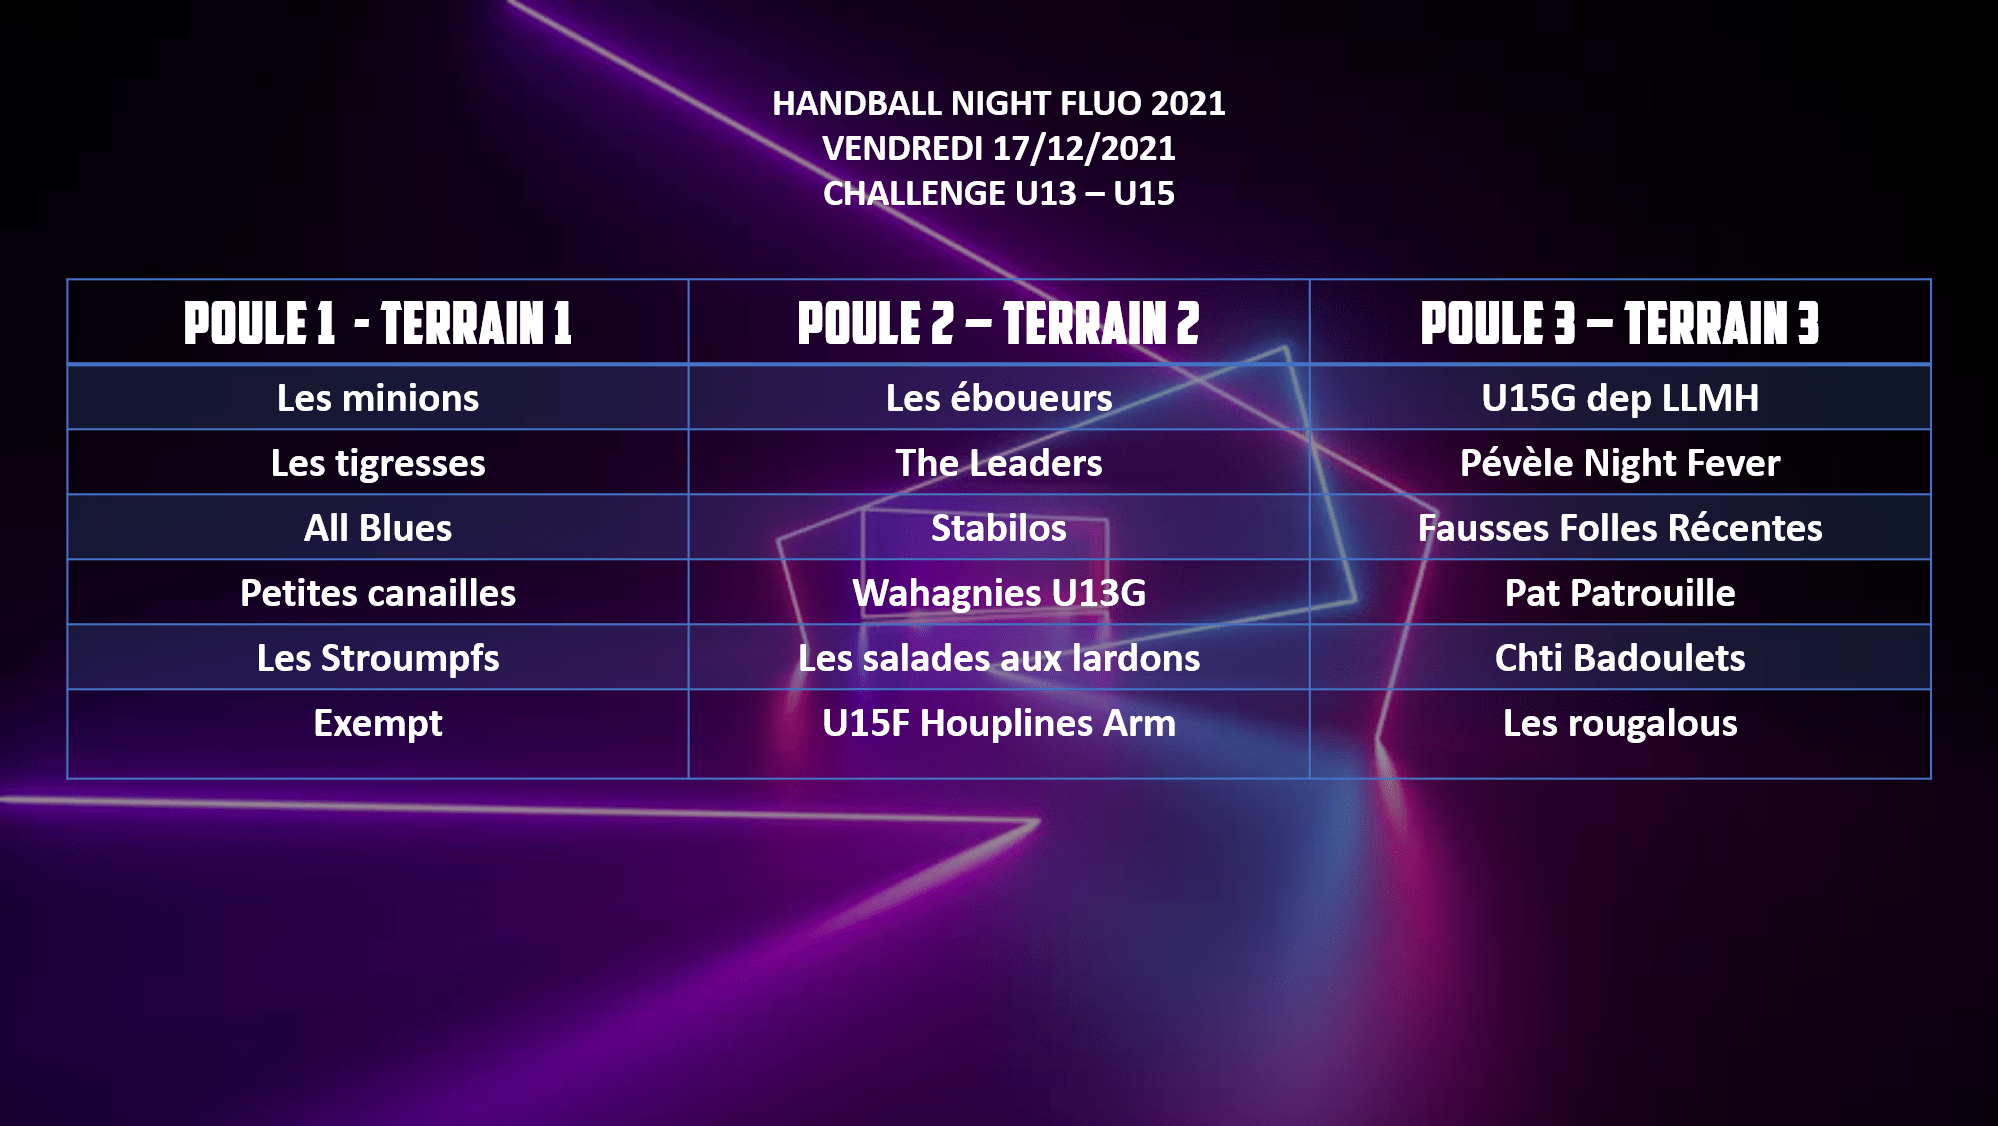 Poules U13 - U15 Handball Night Fluo 2021